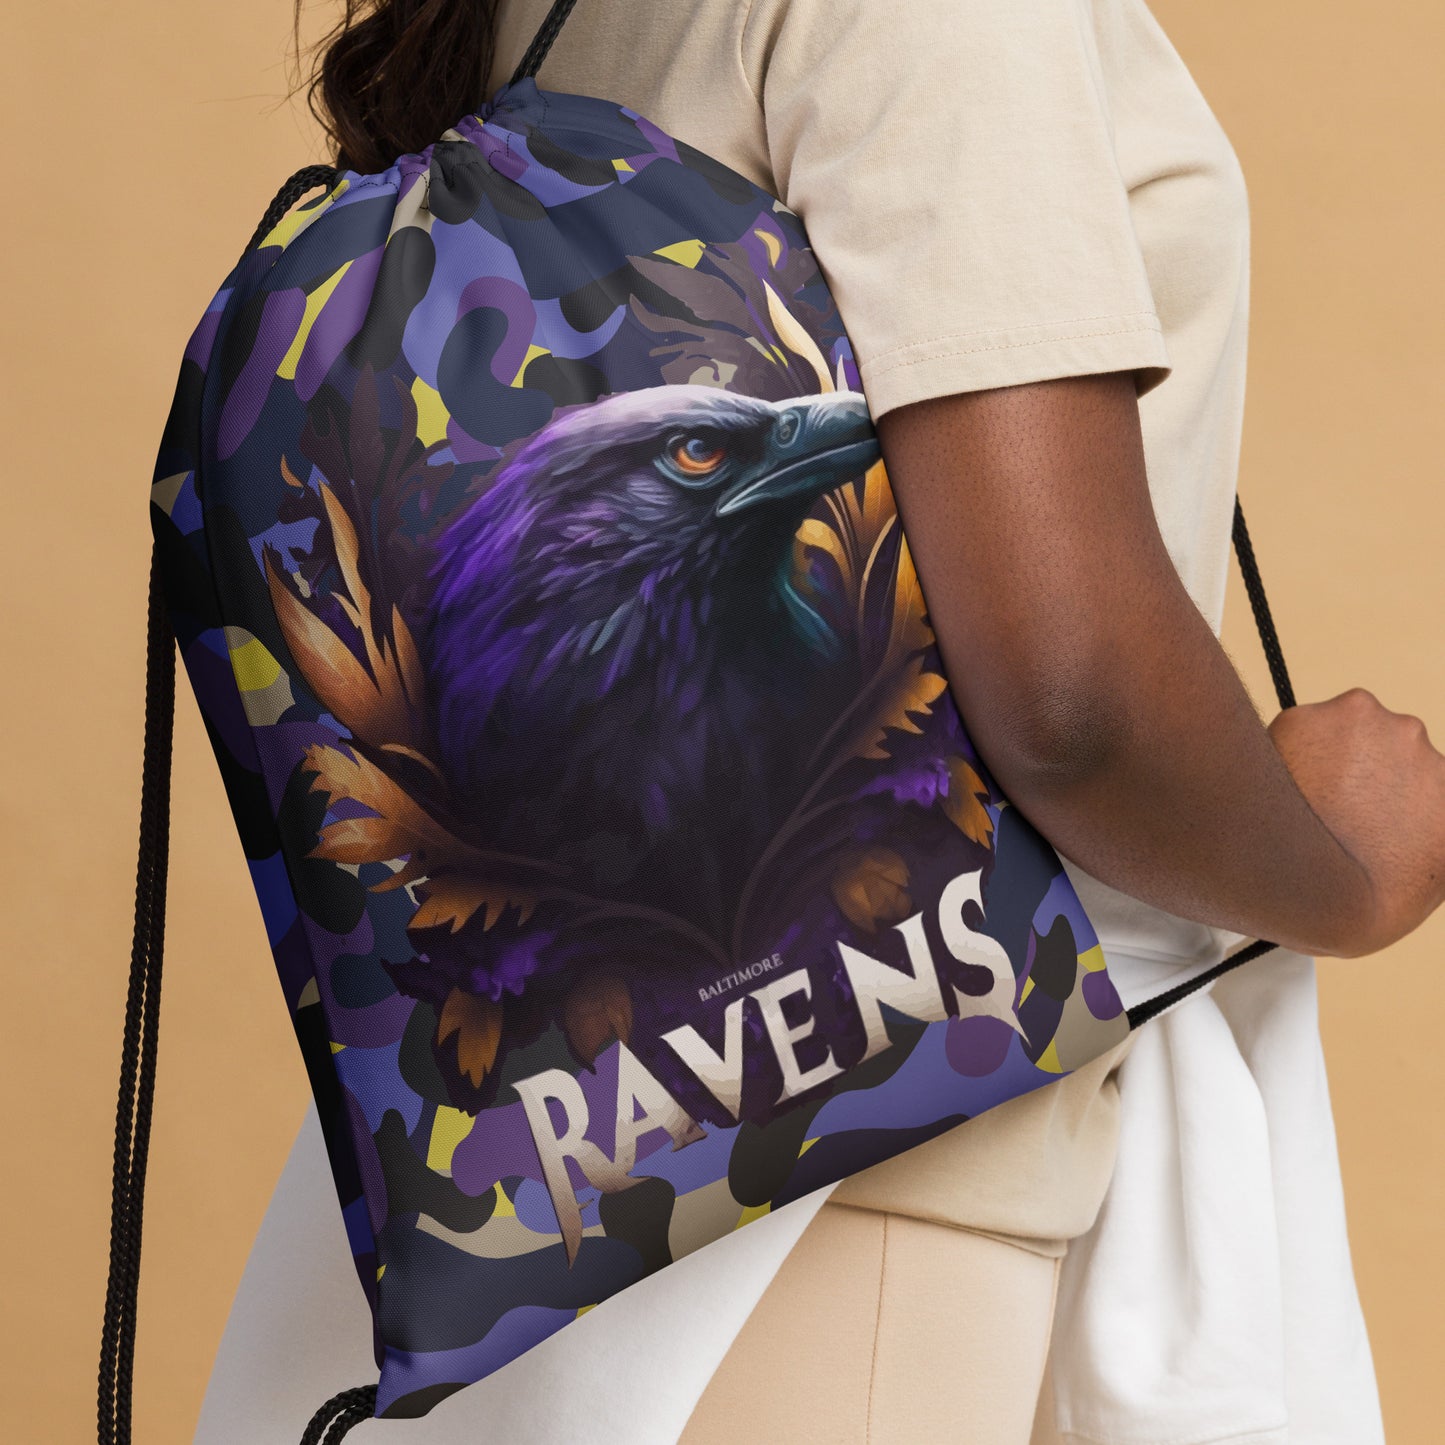 Raven Camo Drawstring Bag